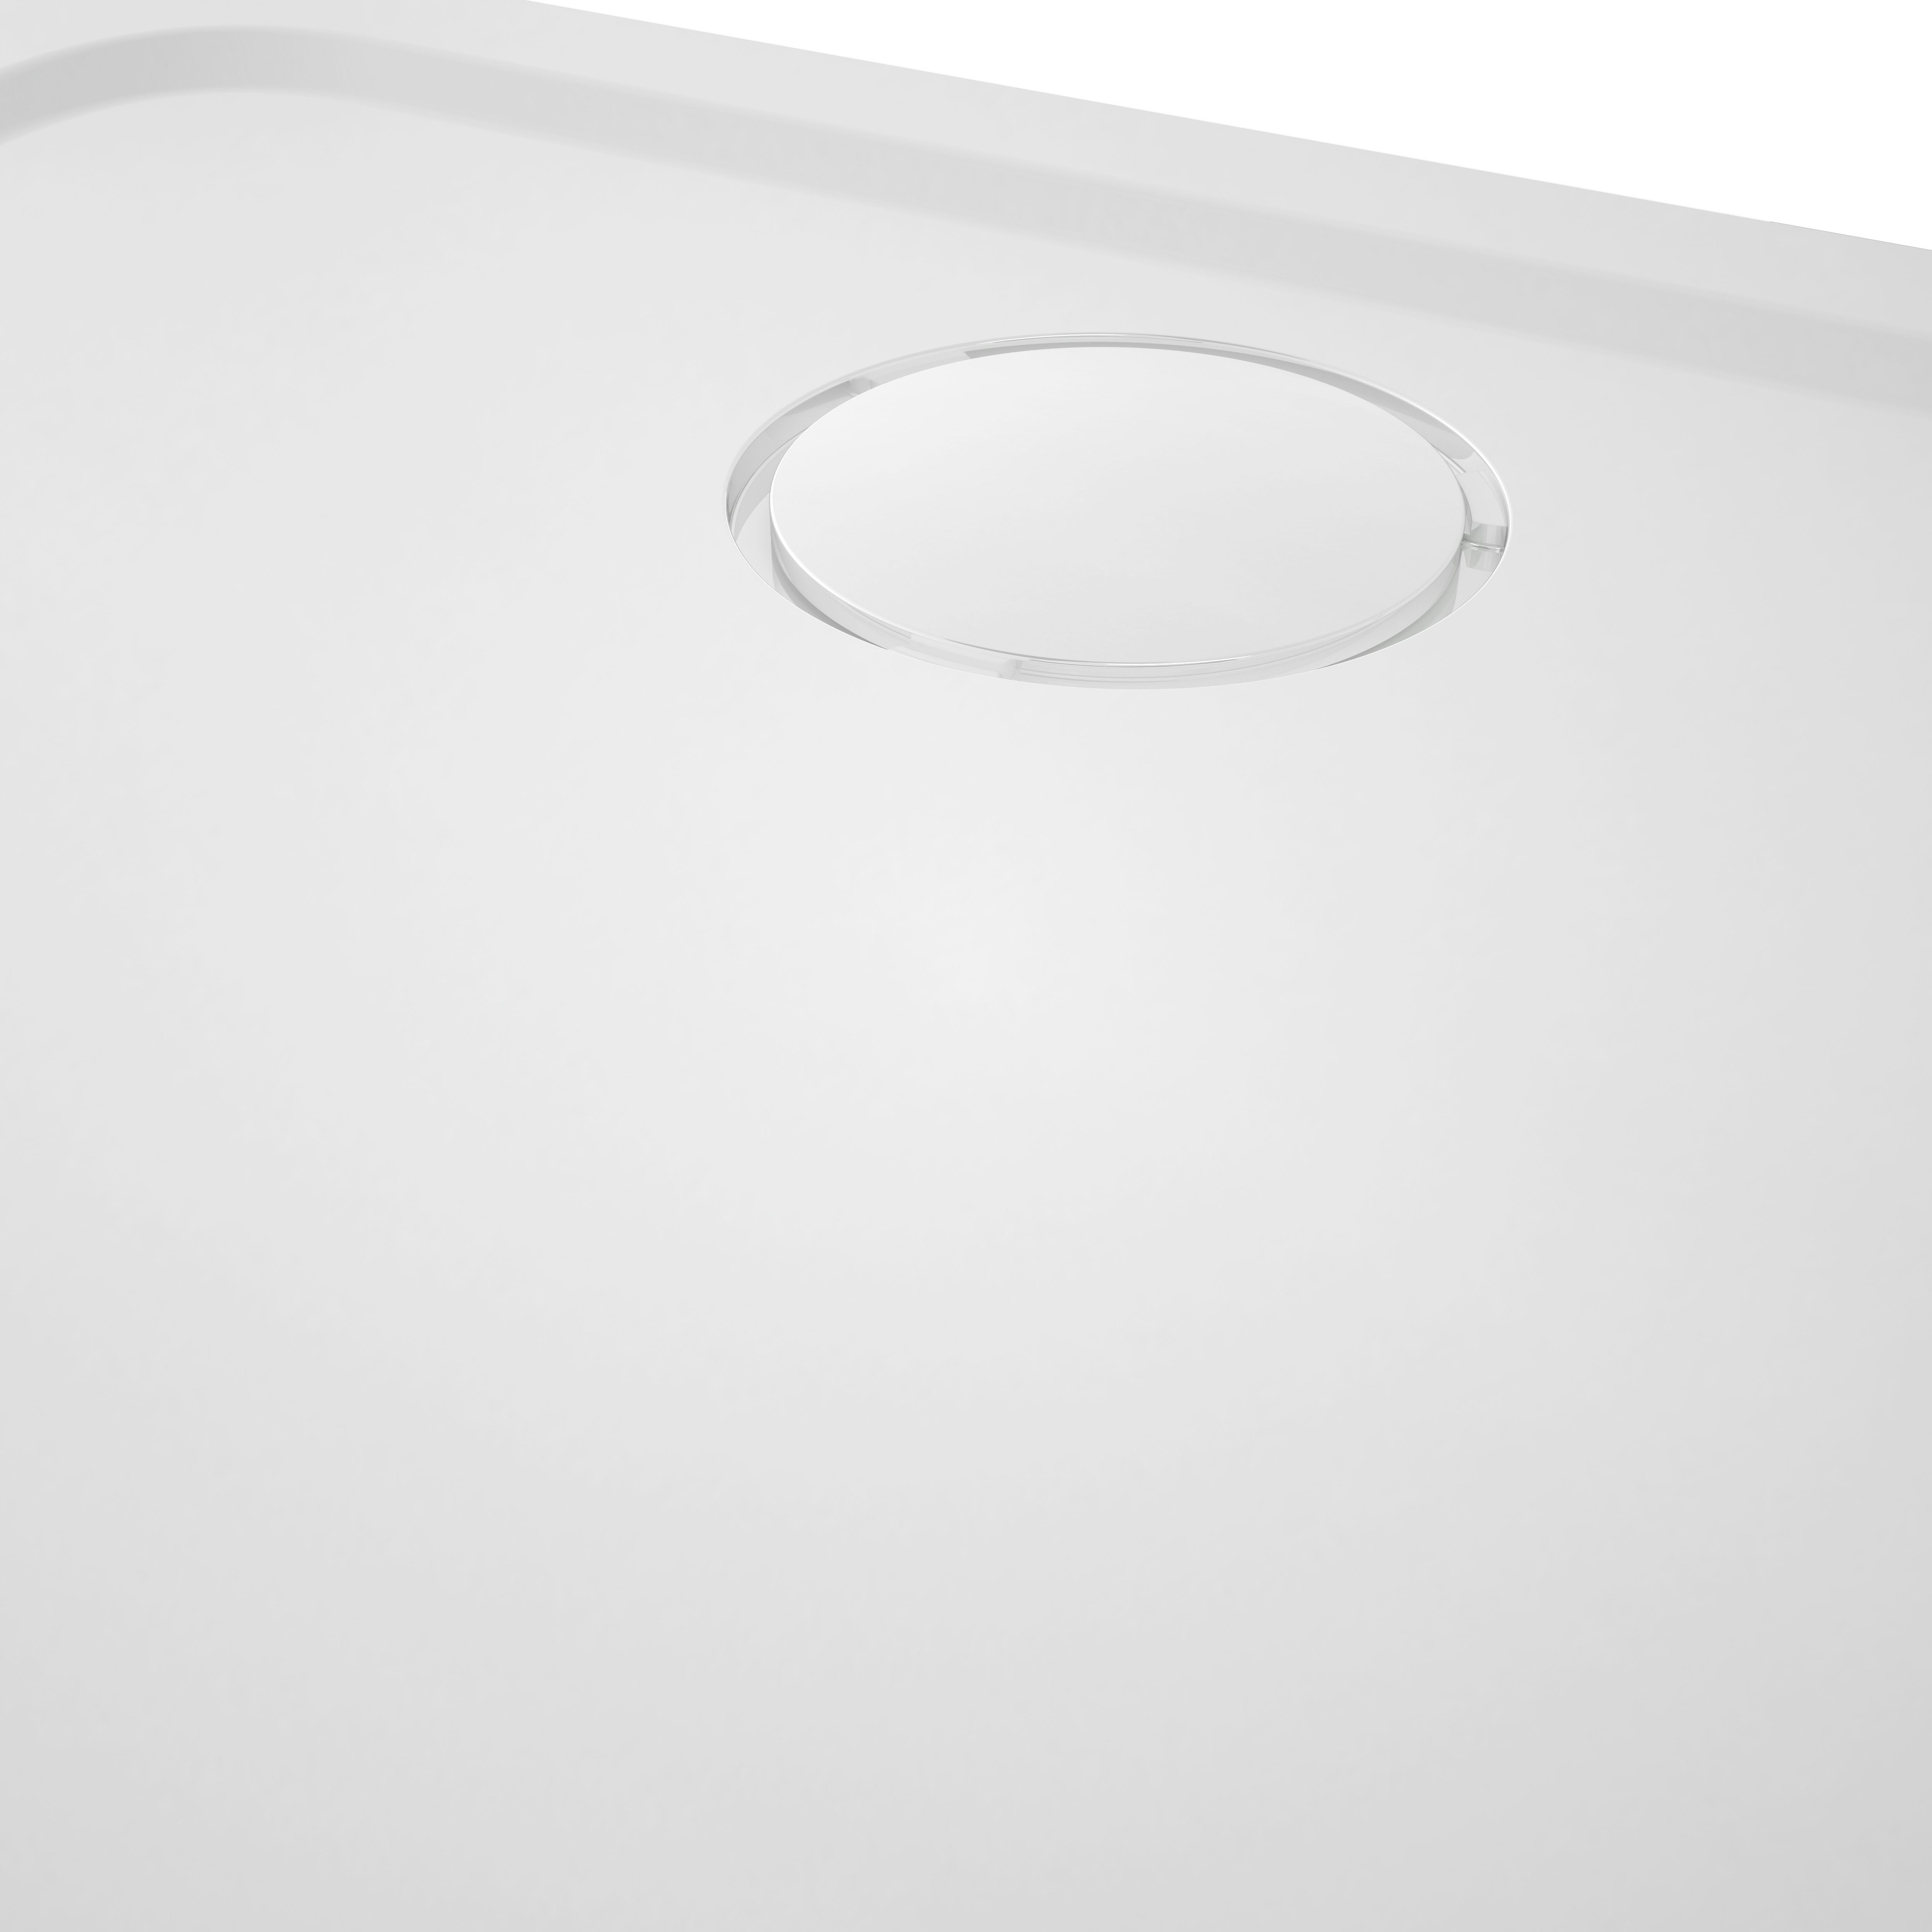 GoodHome White Rectangular End drain Shower tray (L)80cm (W)120cm (H)2.7cm